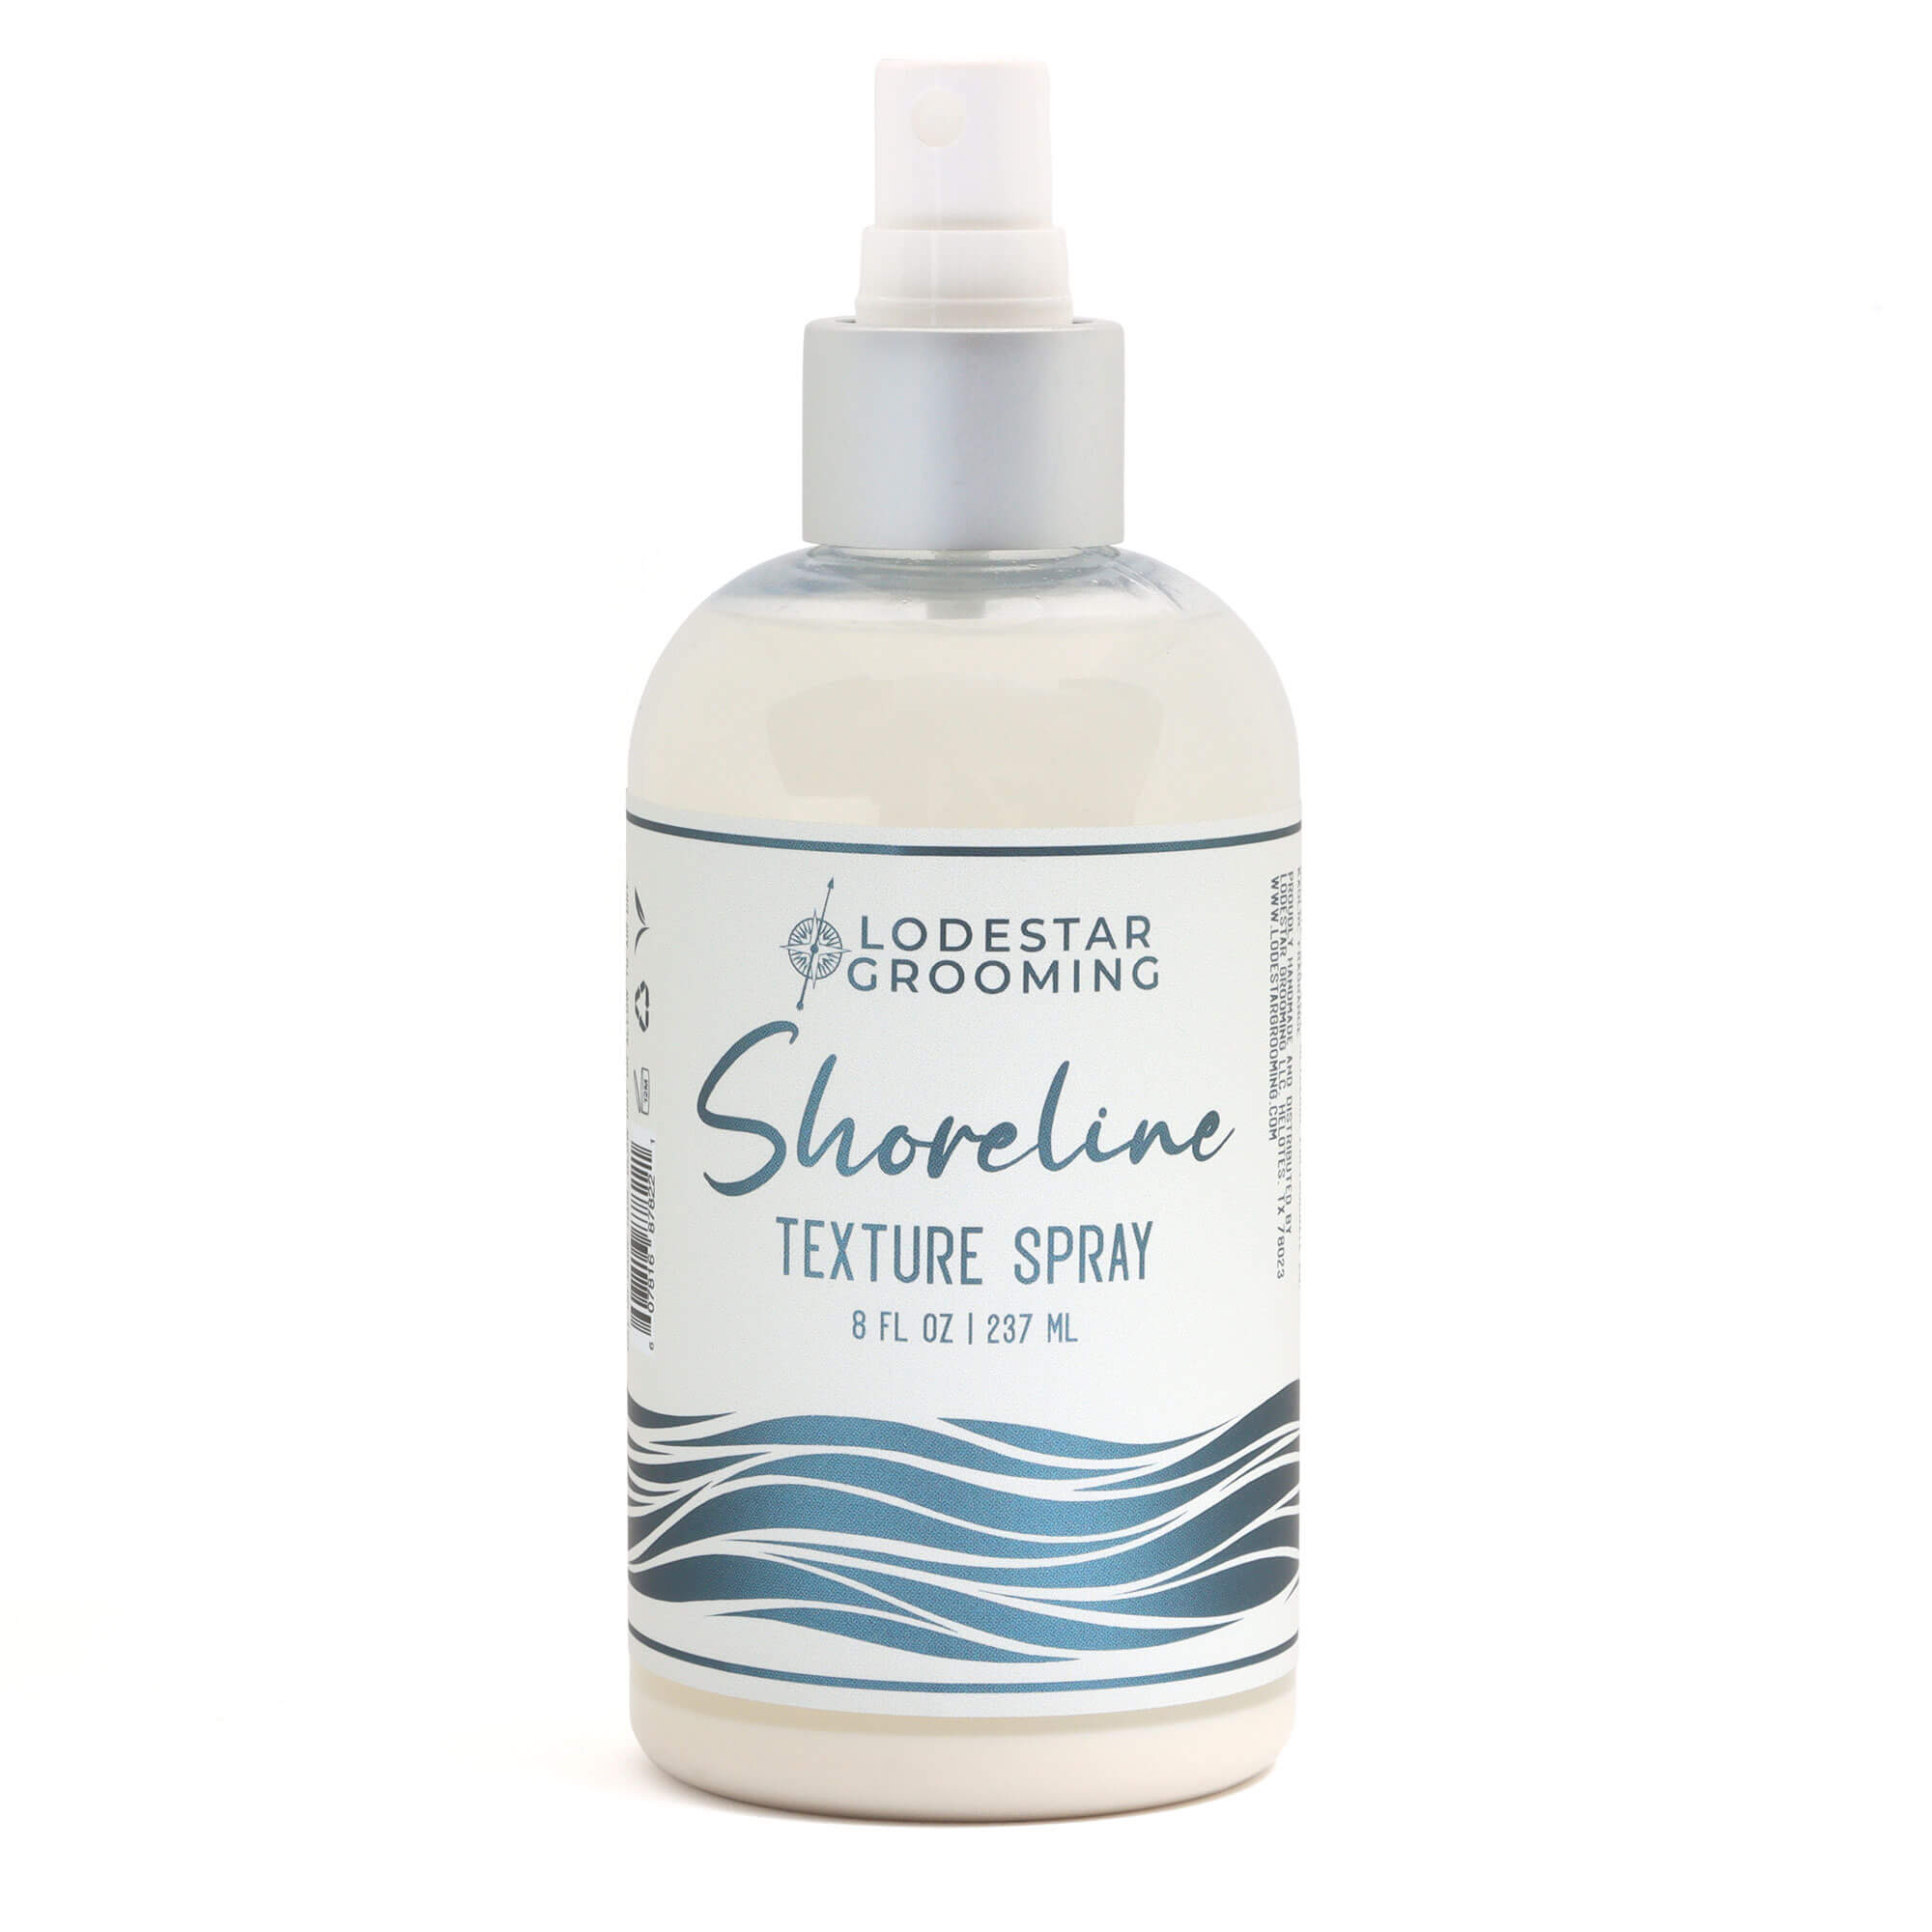 Lodestar Grooming Shoreline Texture Spray